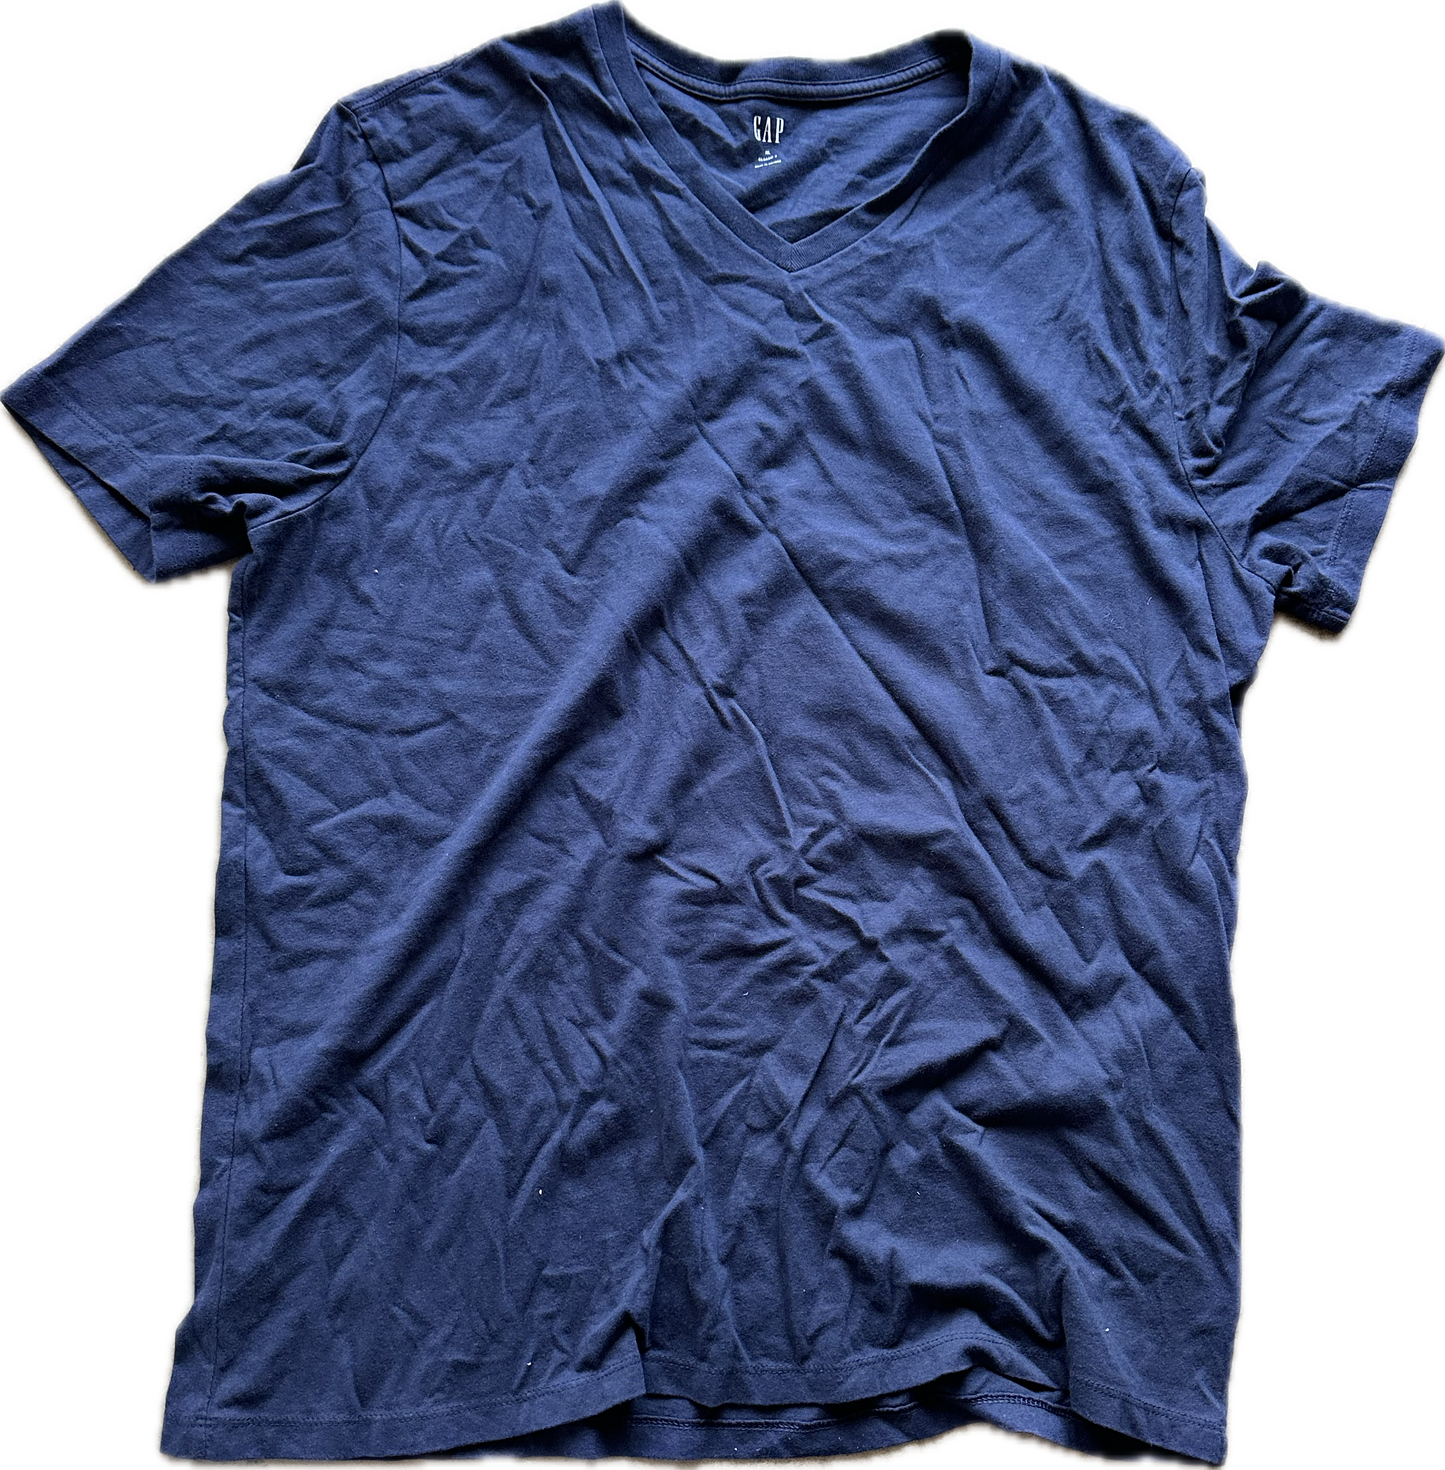 HOUSE: Dr Gregory House GAP Blue V-Neck T-shirt (XL)